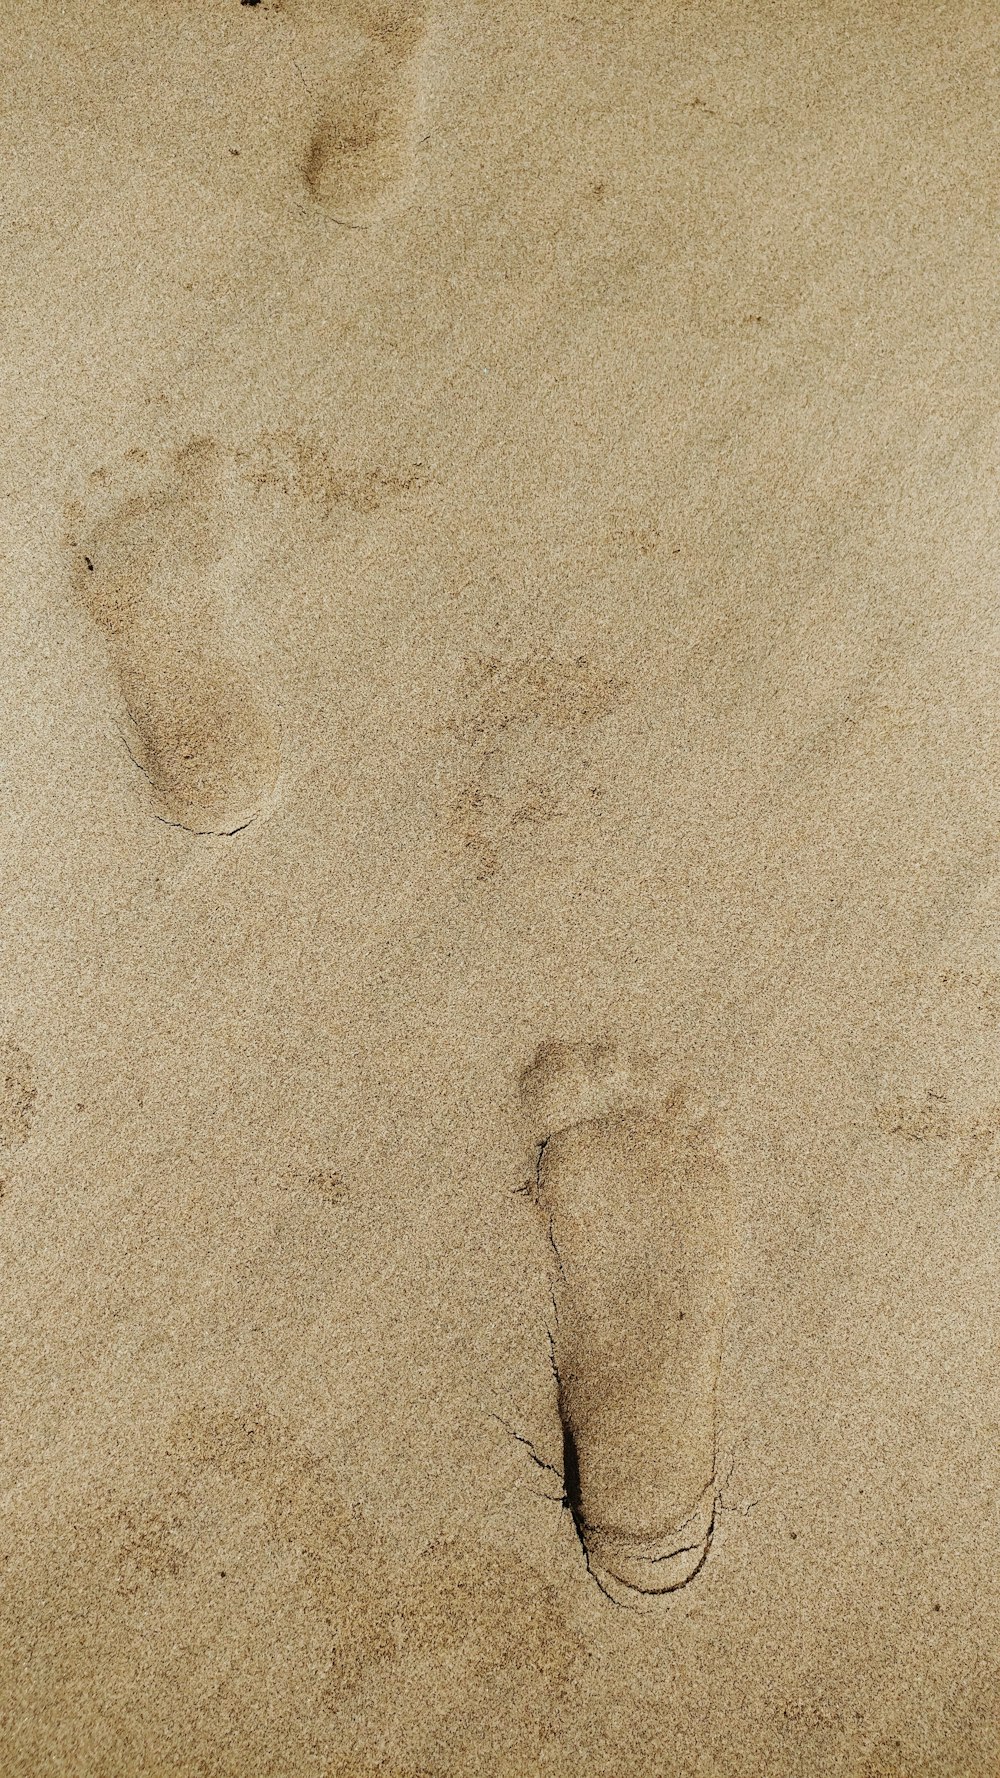 close-up photo of sand foot print